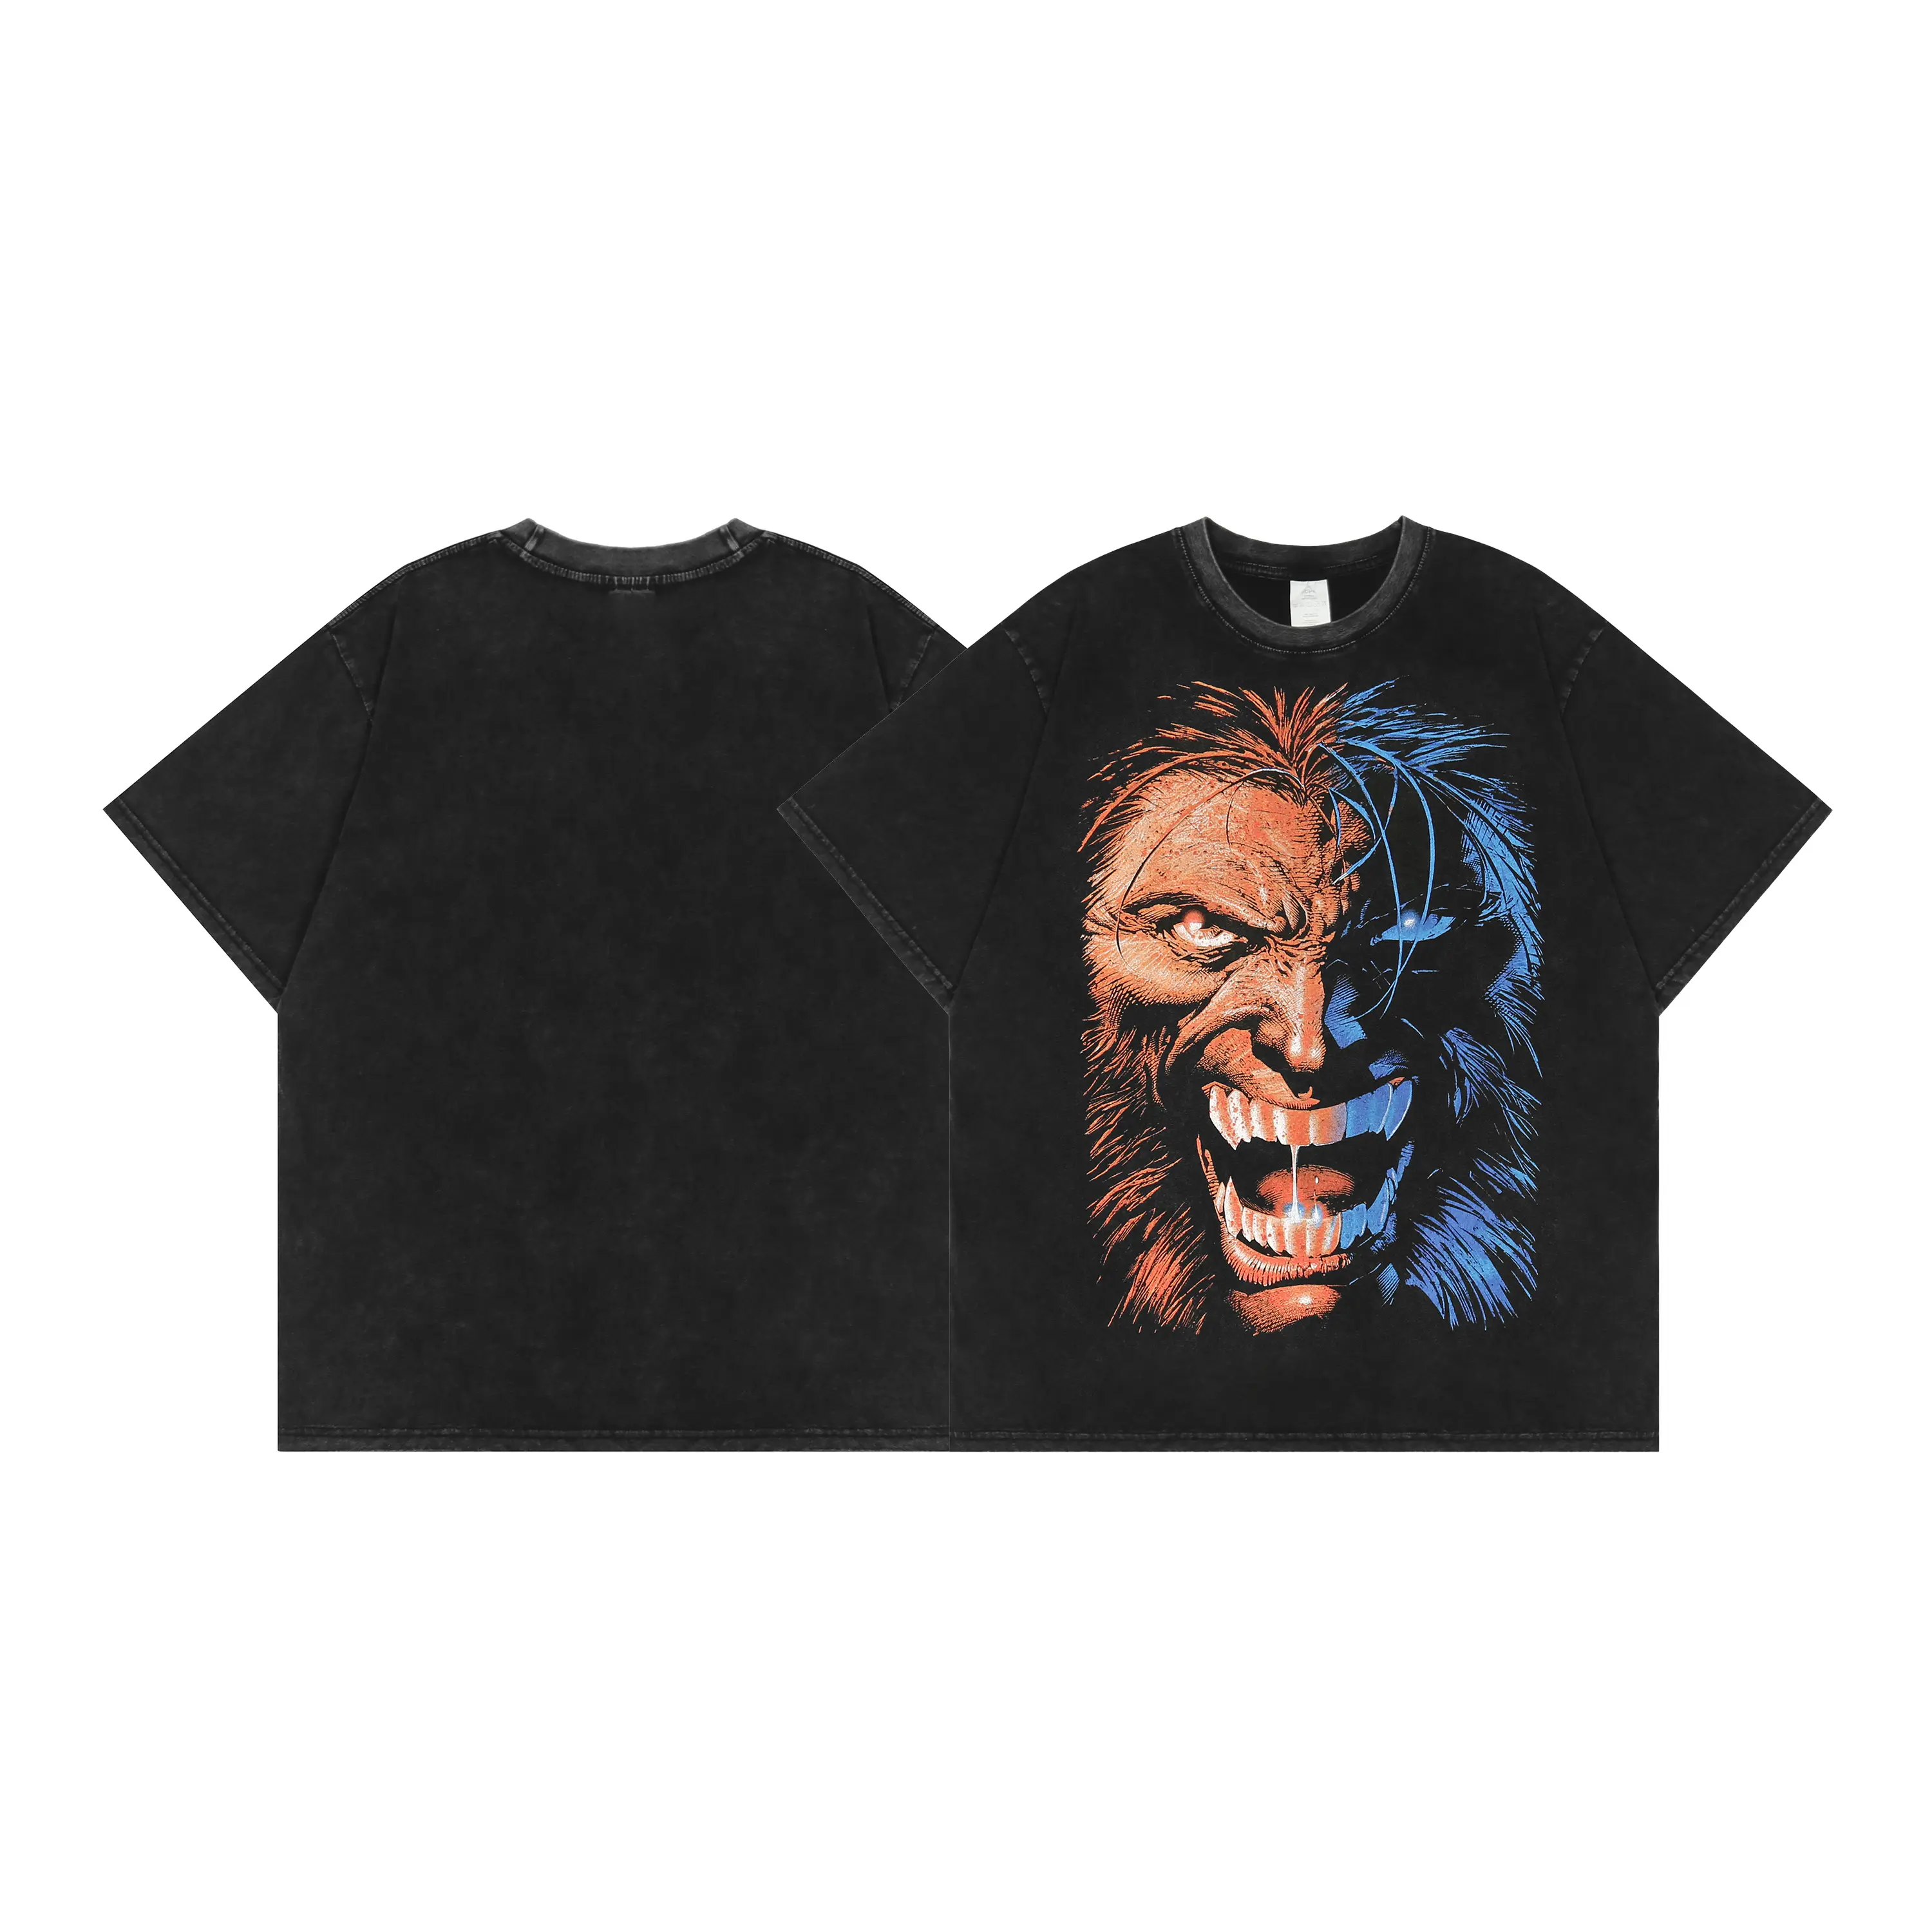 Fashion vlones wholesale men's 100% cotton T-shirt Pullover lion print men's short sleeved washed Black Wholesale